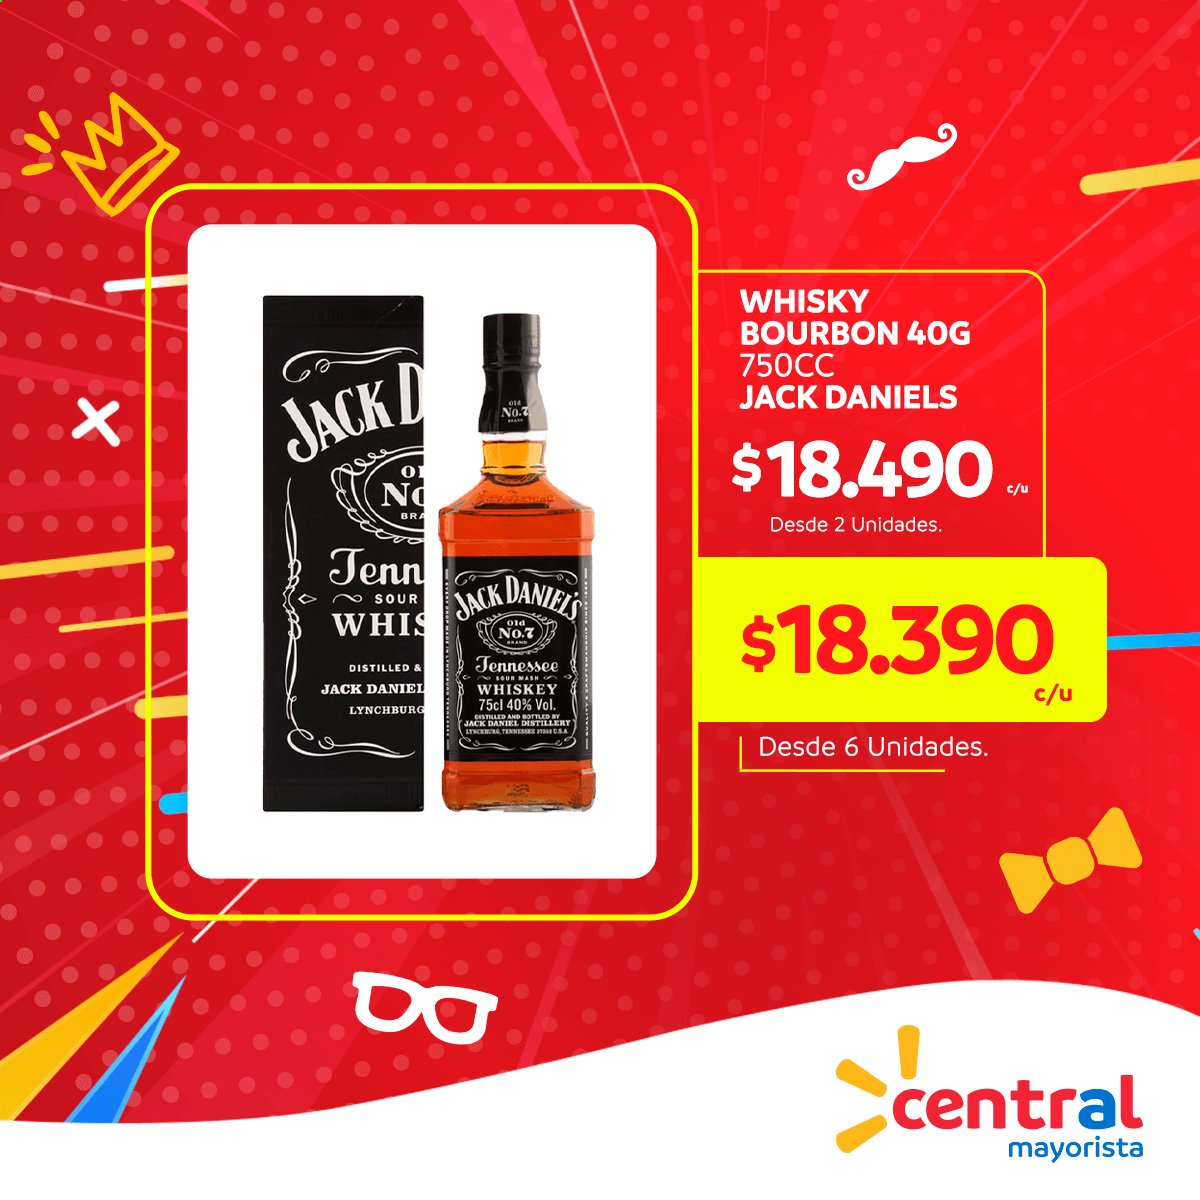 thumbnail - Catálogo Central Mayorista - 17.06.2021 - 20.06.2021 - Ventas - bourbon, Jack Daniel’s, whisky. Página 1.